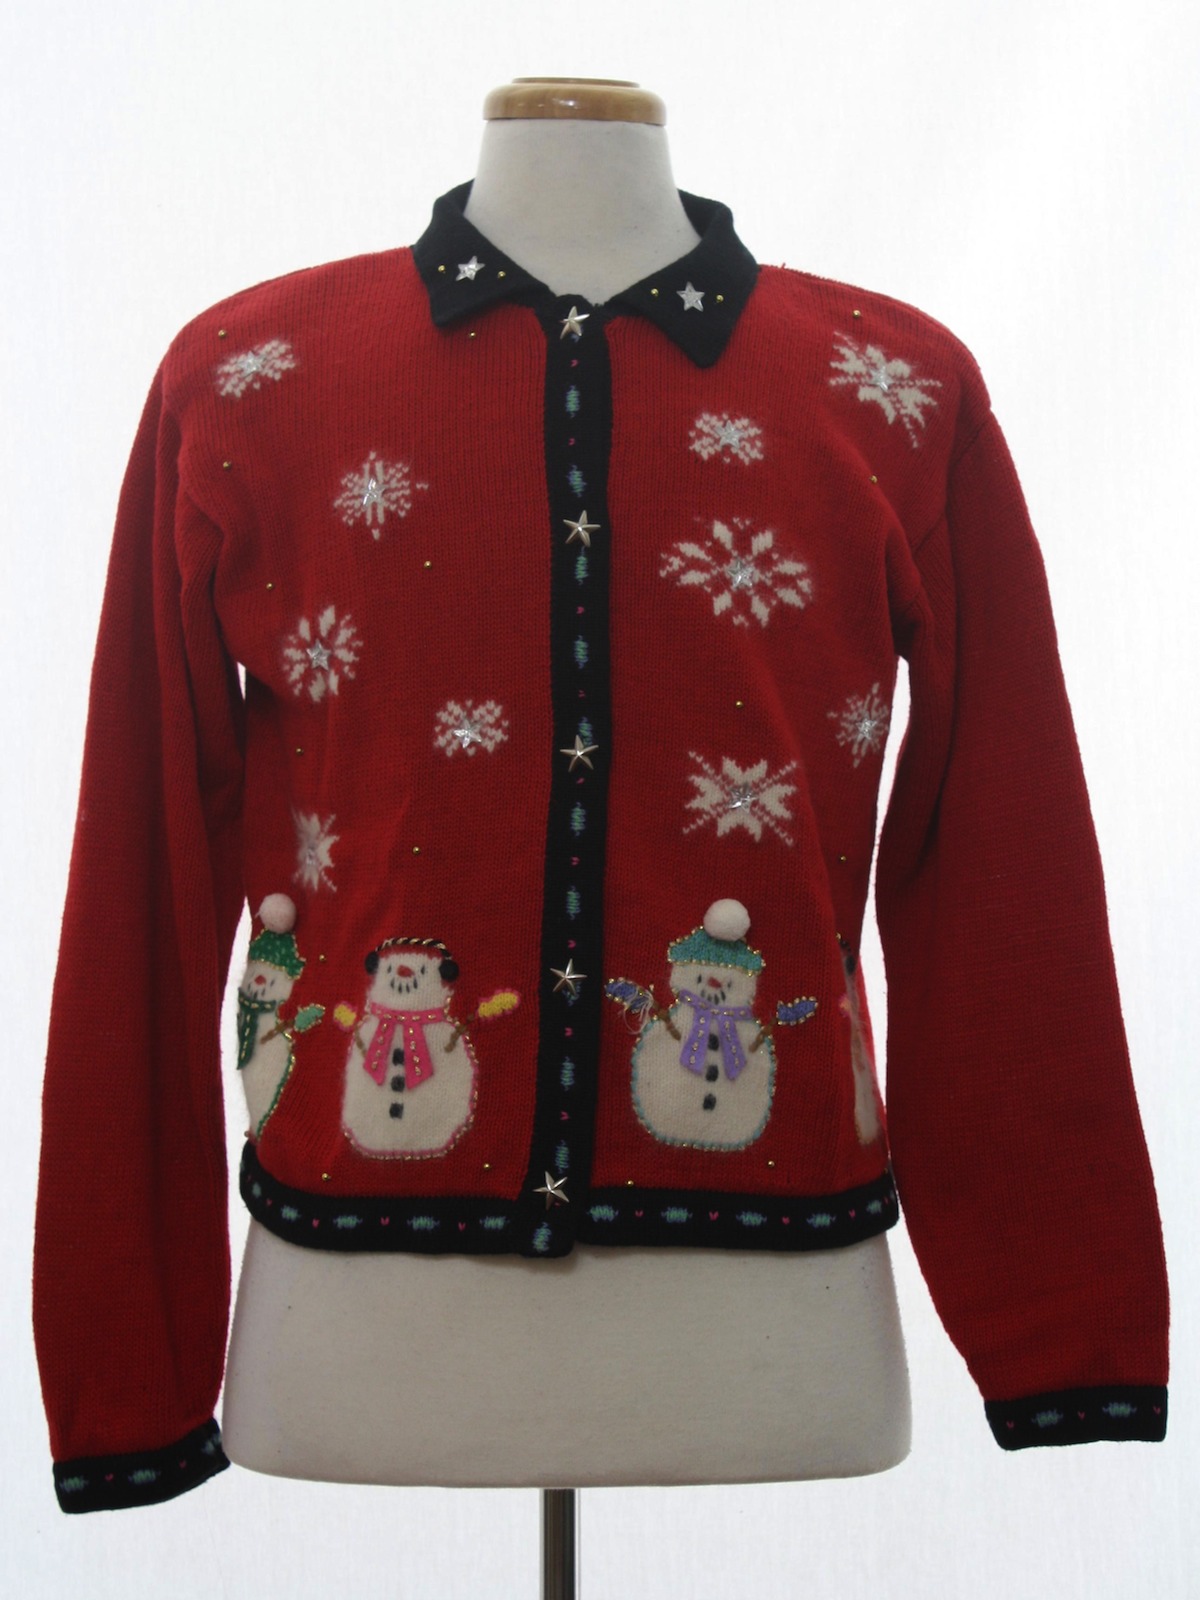 Womens Ugly Christmas Sweater: -Karen Scott- Womens red background ...